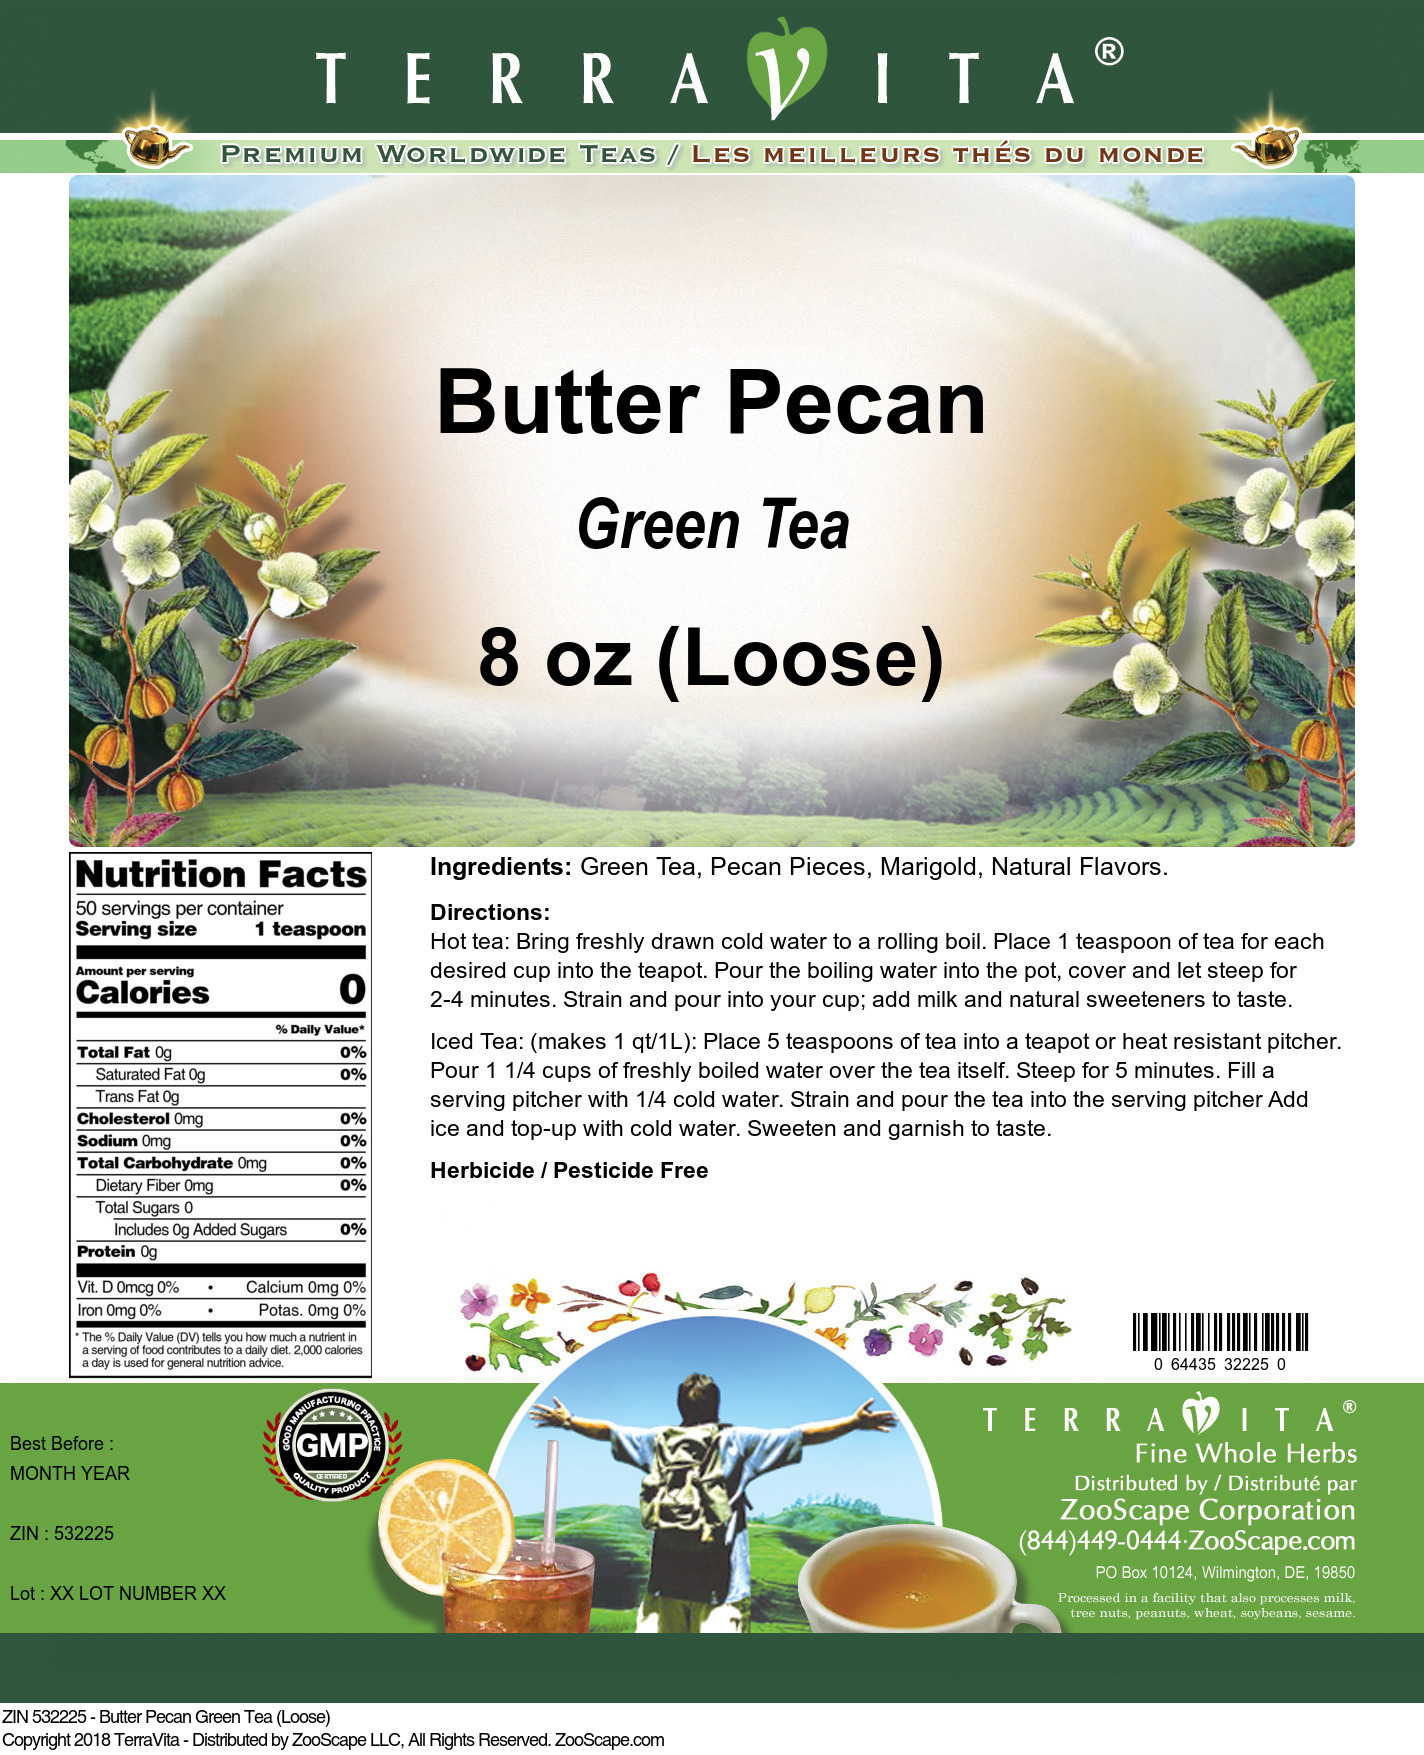 Butter Pecan Green Tea (Loose) - Label